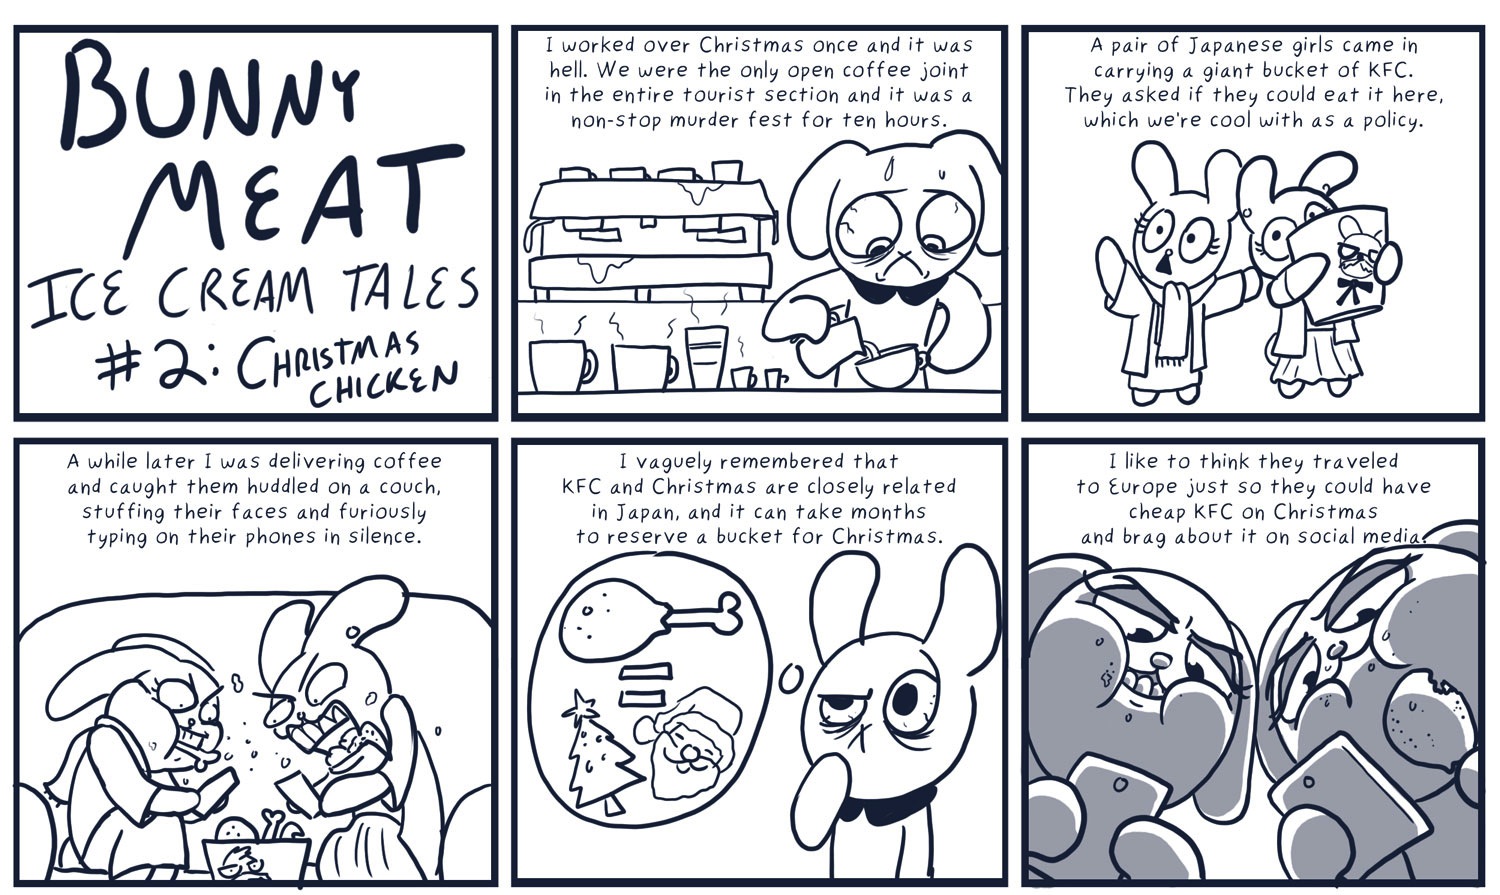 Ice Cream Tales #2: Christmas Chicken